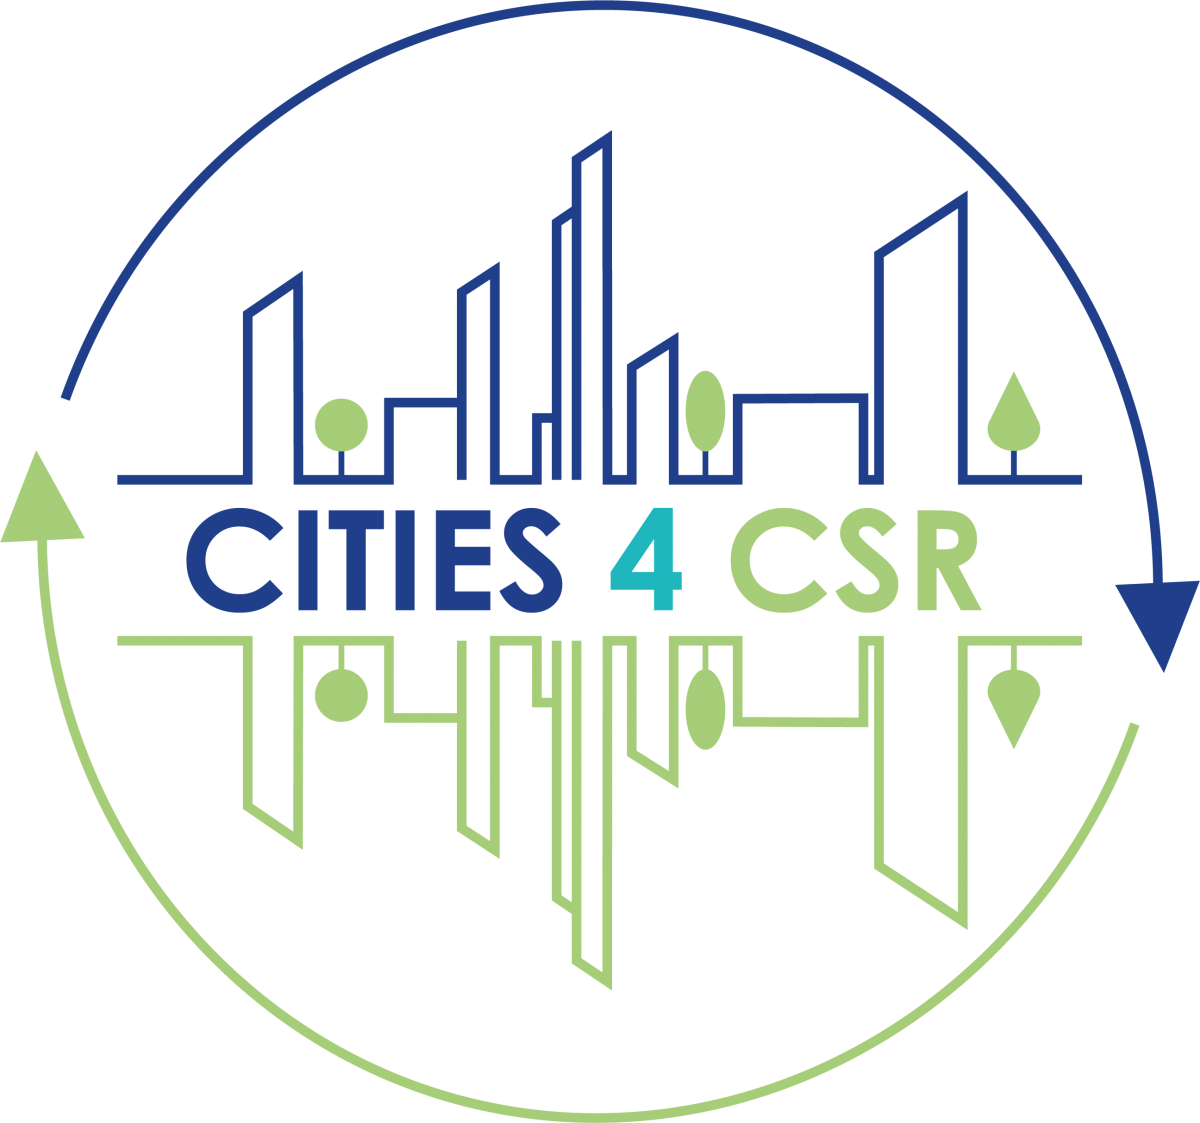 https://urbact.eu/sites/default/files/logo/cities4csr_logo.png